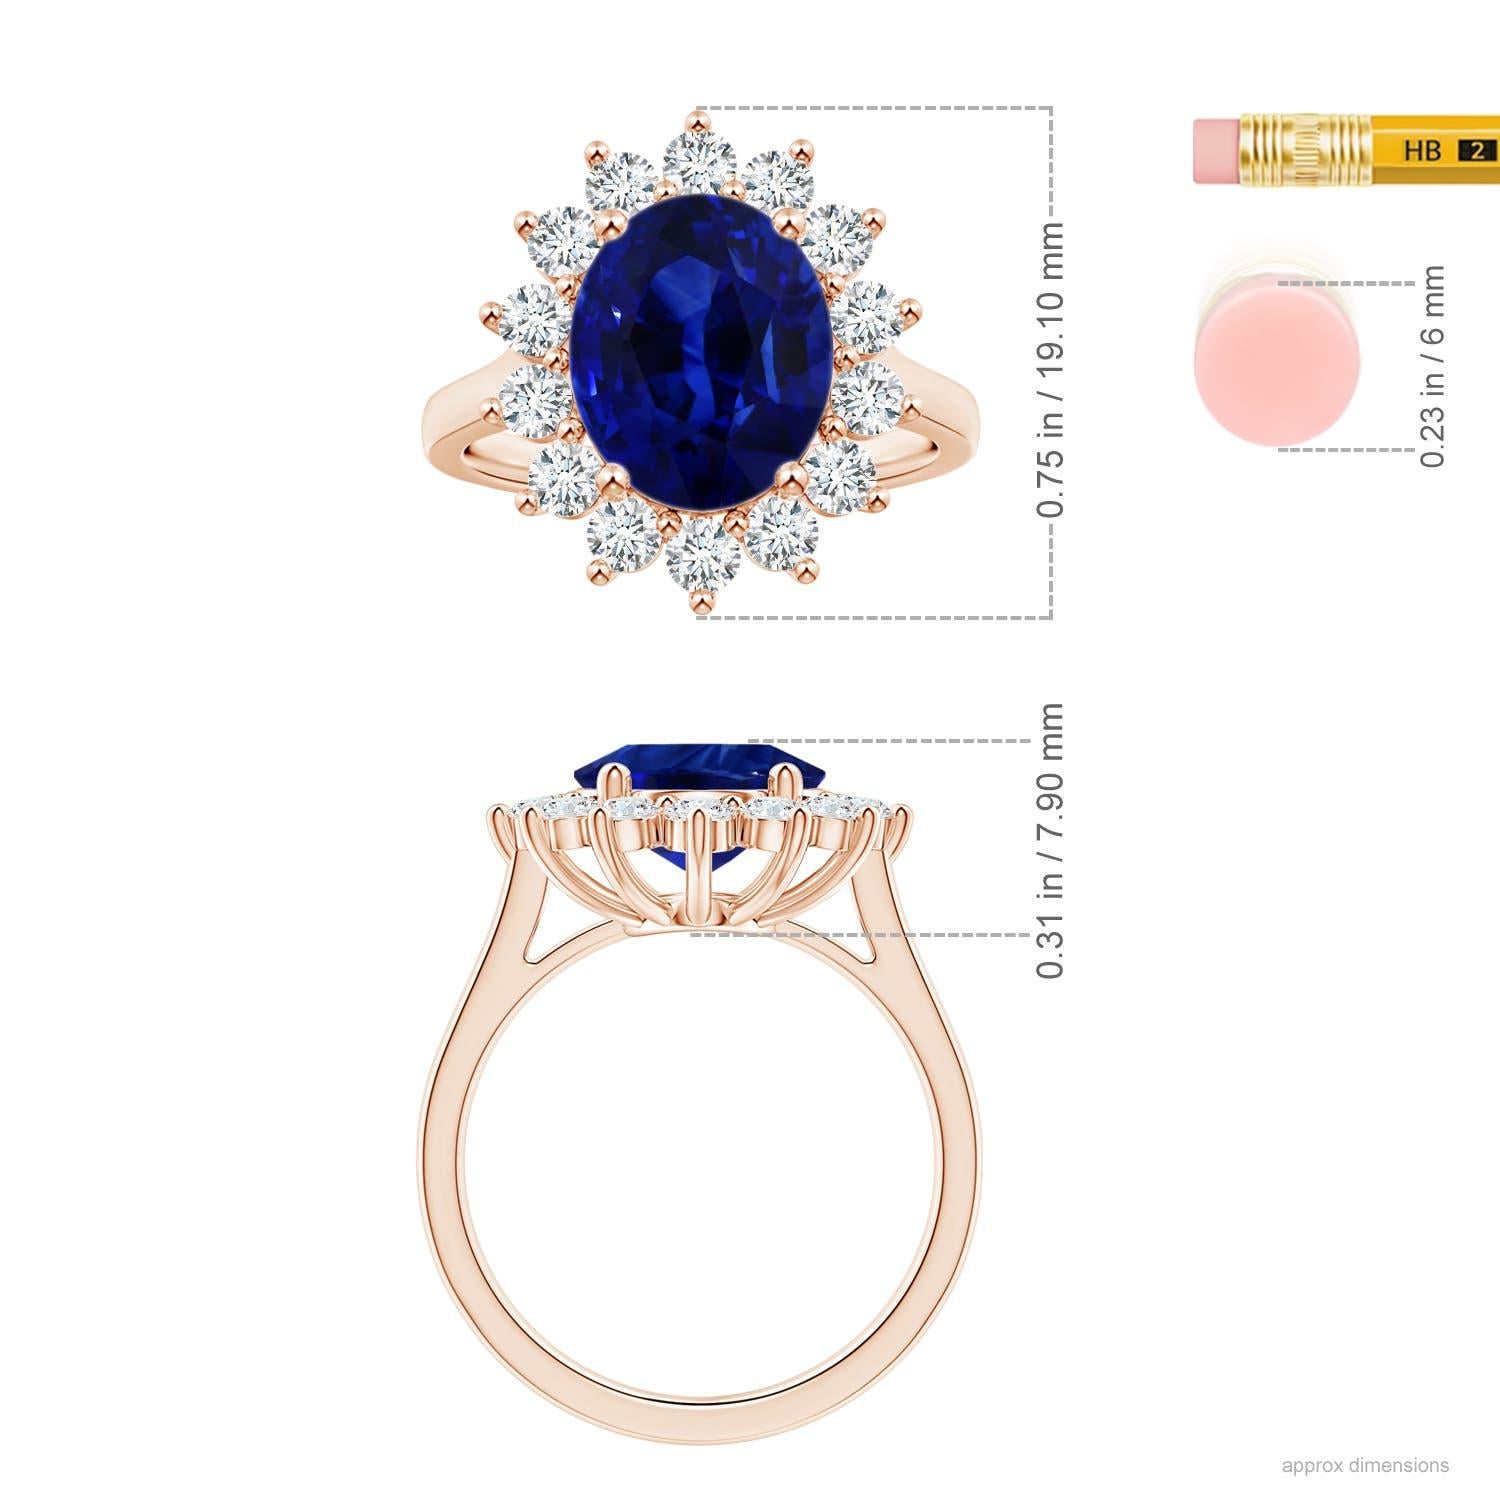 Im Angebot: ANGARA Prinzessin Diana inspirierter GIA-zertifizierter blauer Saphir Halo Roségold Ring () 5